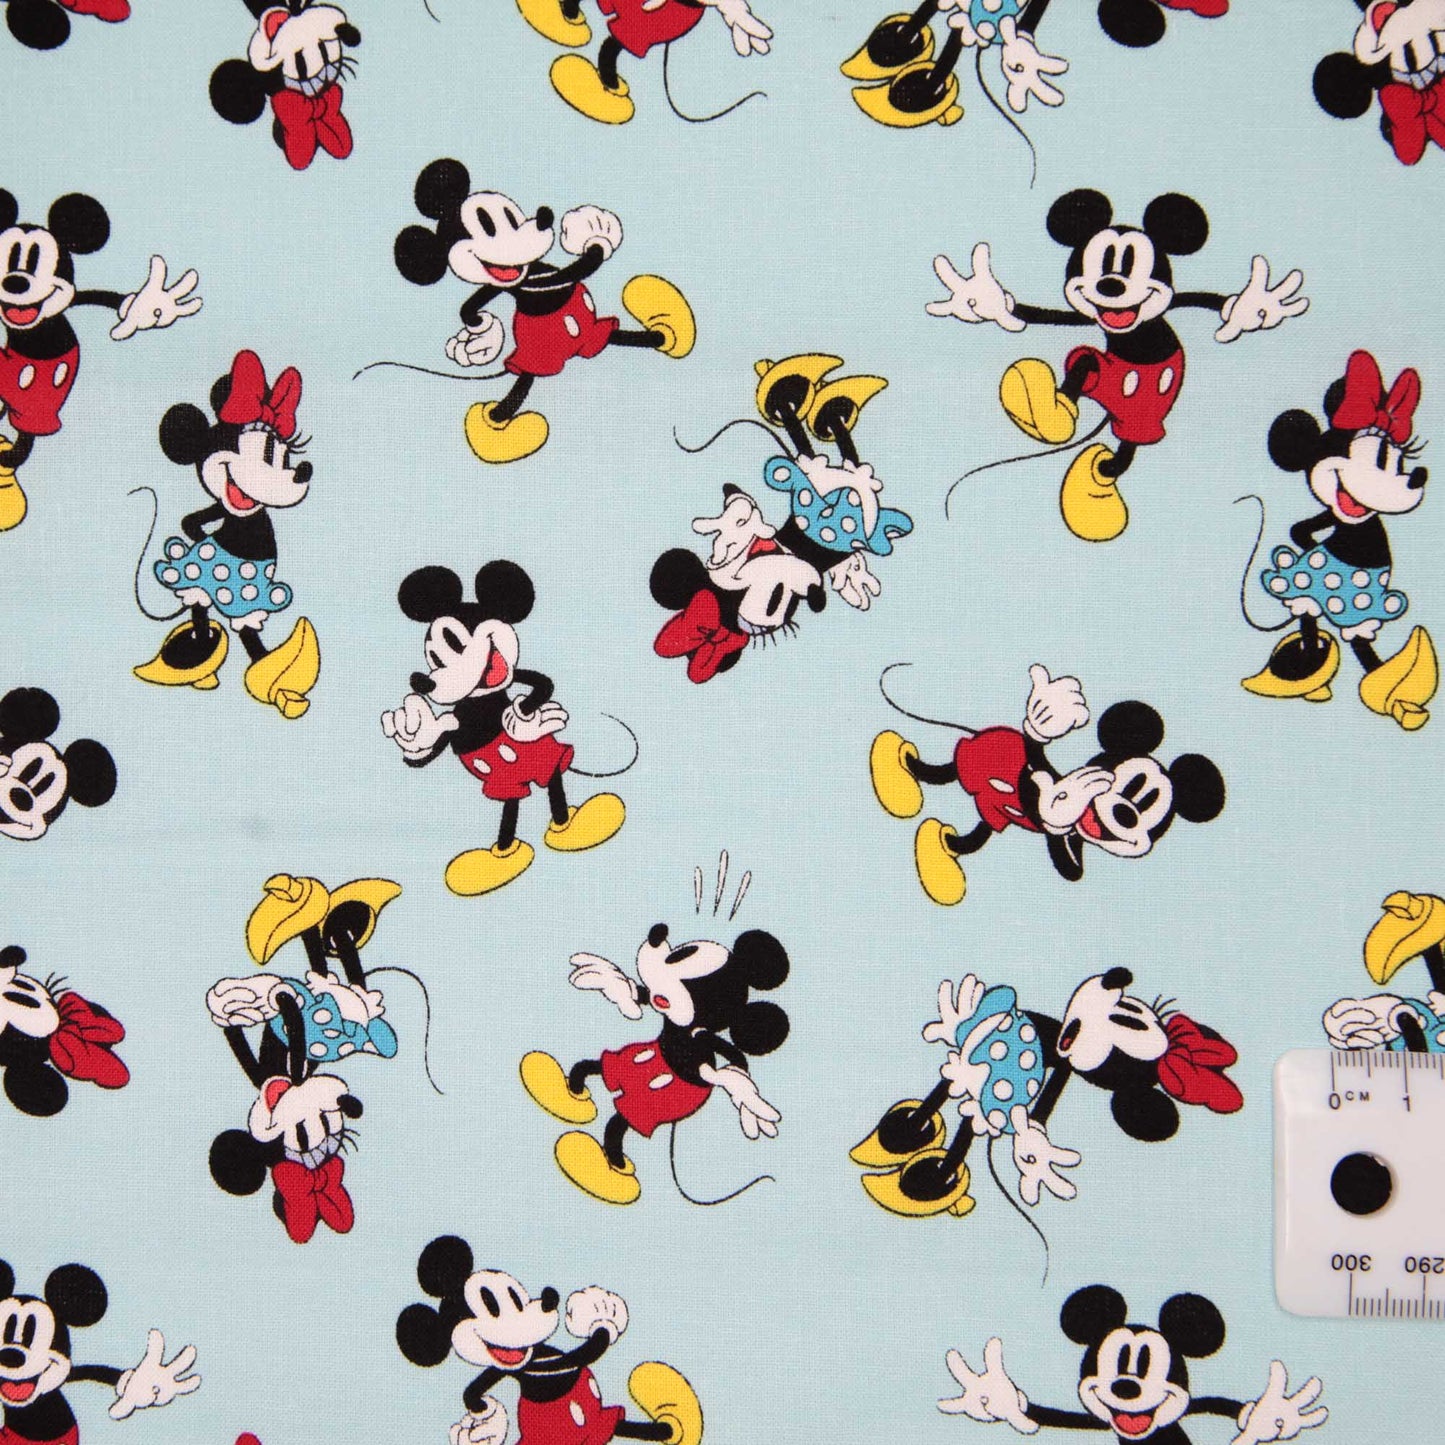 Mickey and Friends - Mickey & Minnie